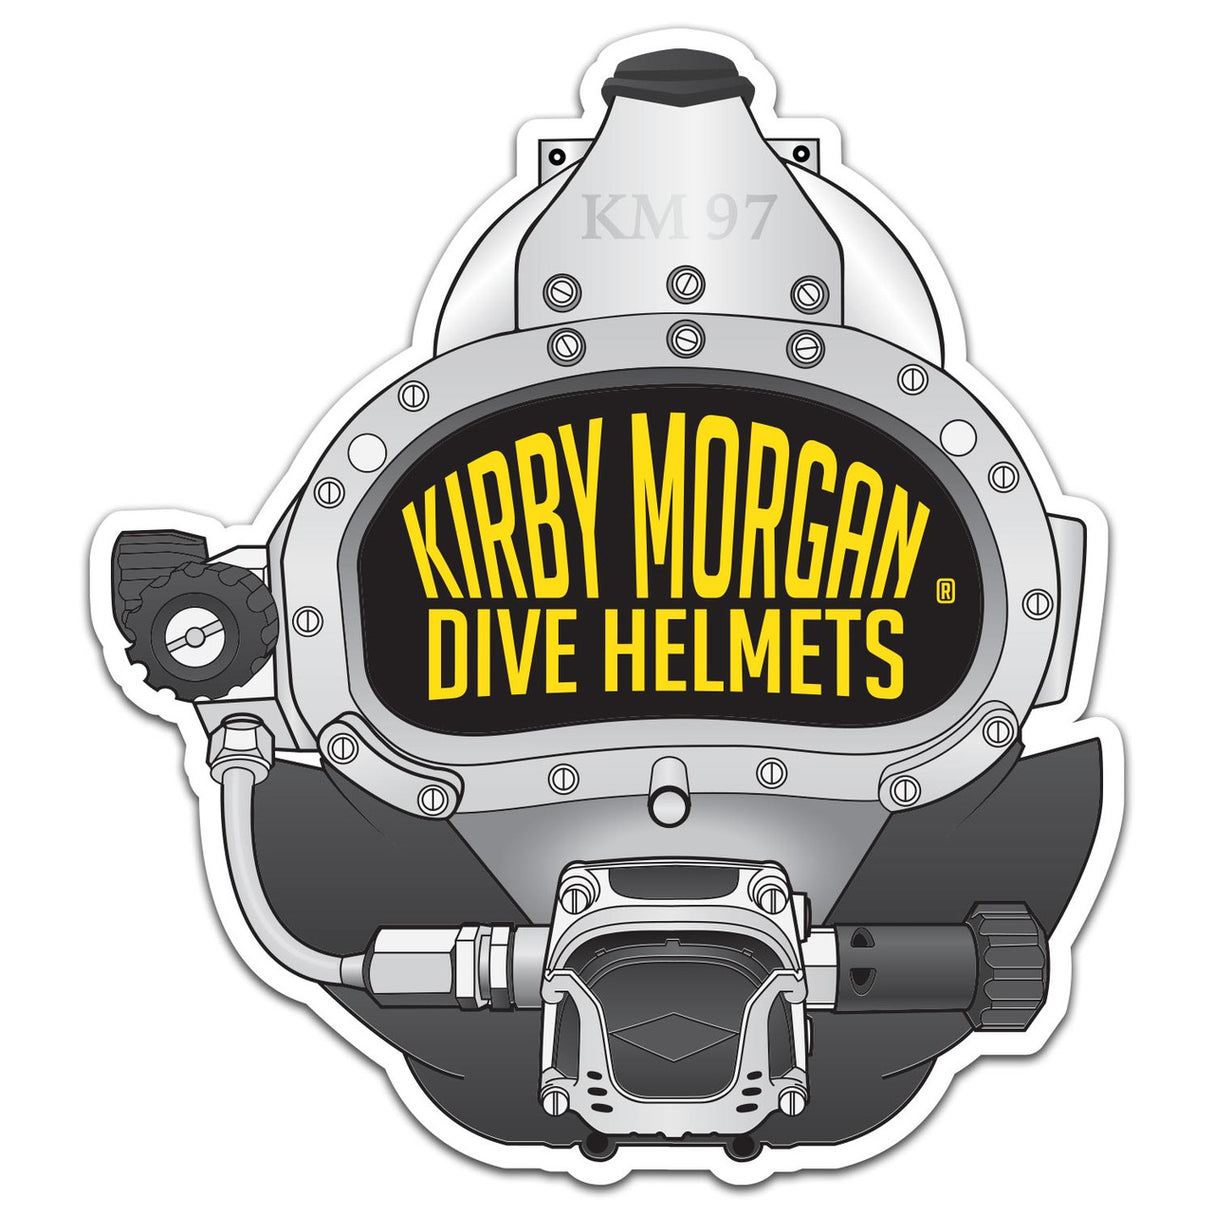 Kirby Morgan Dive Helmets 97 Sticker